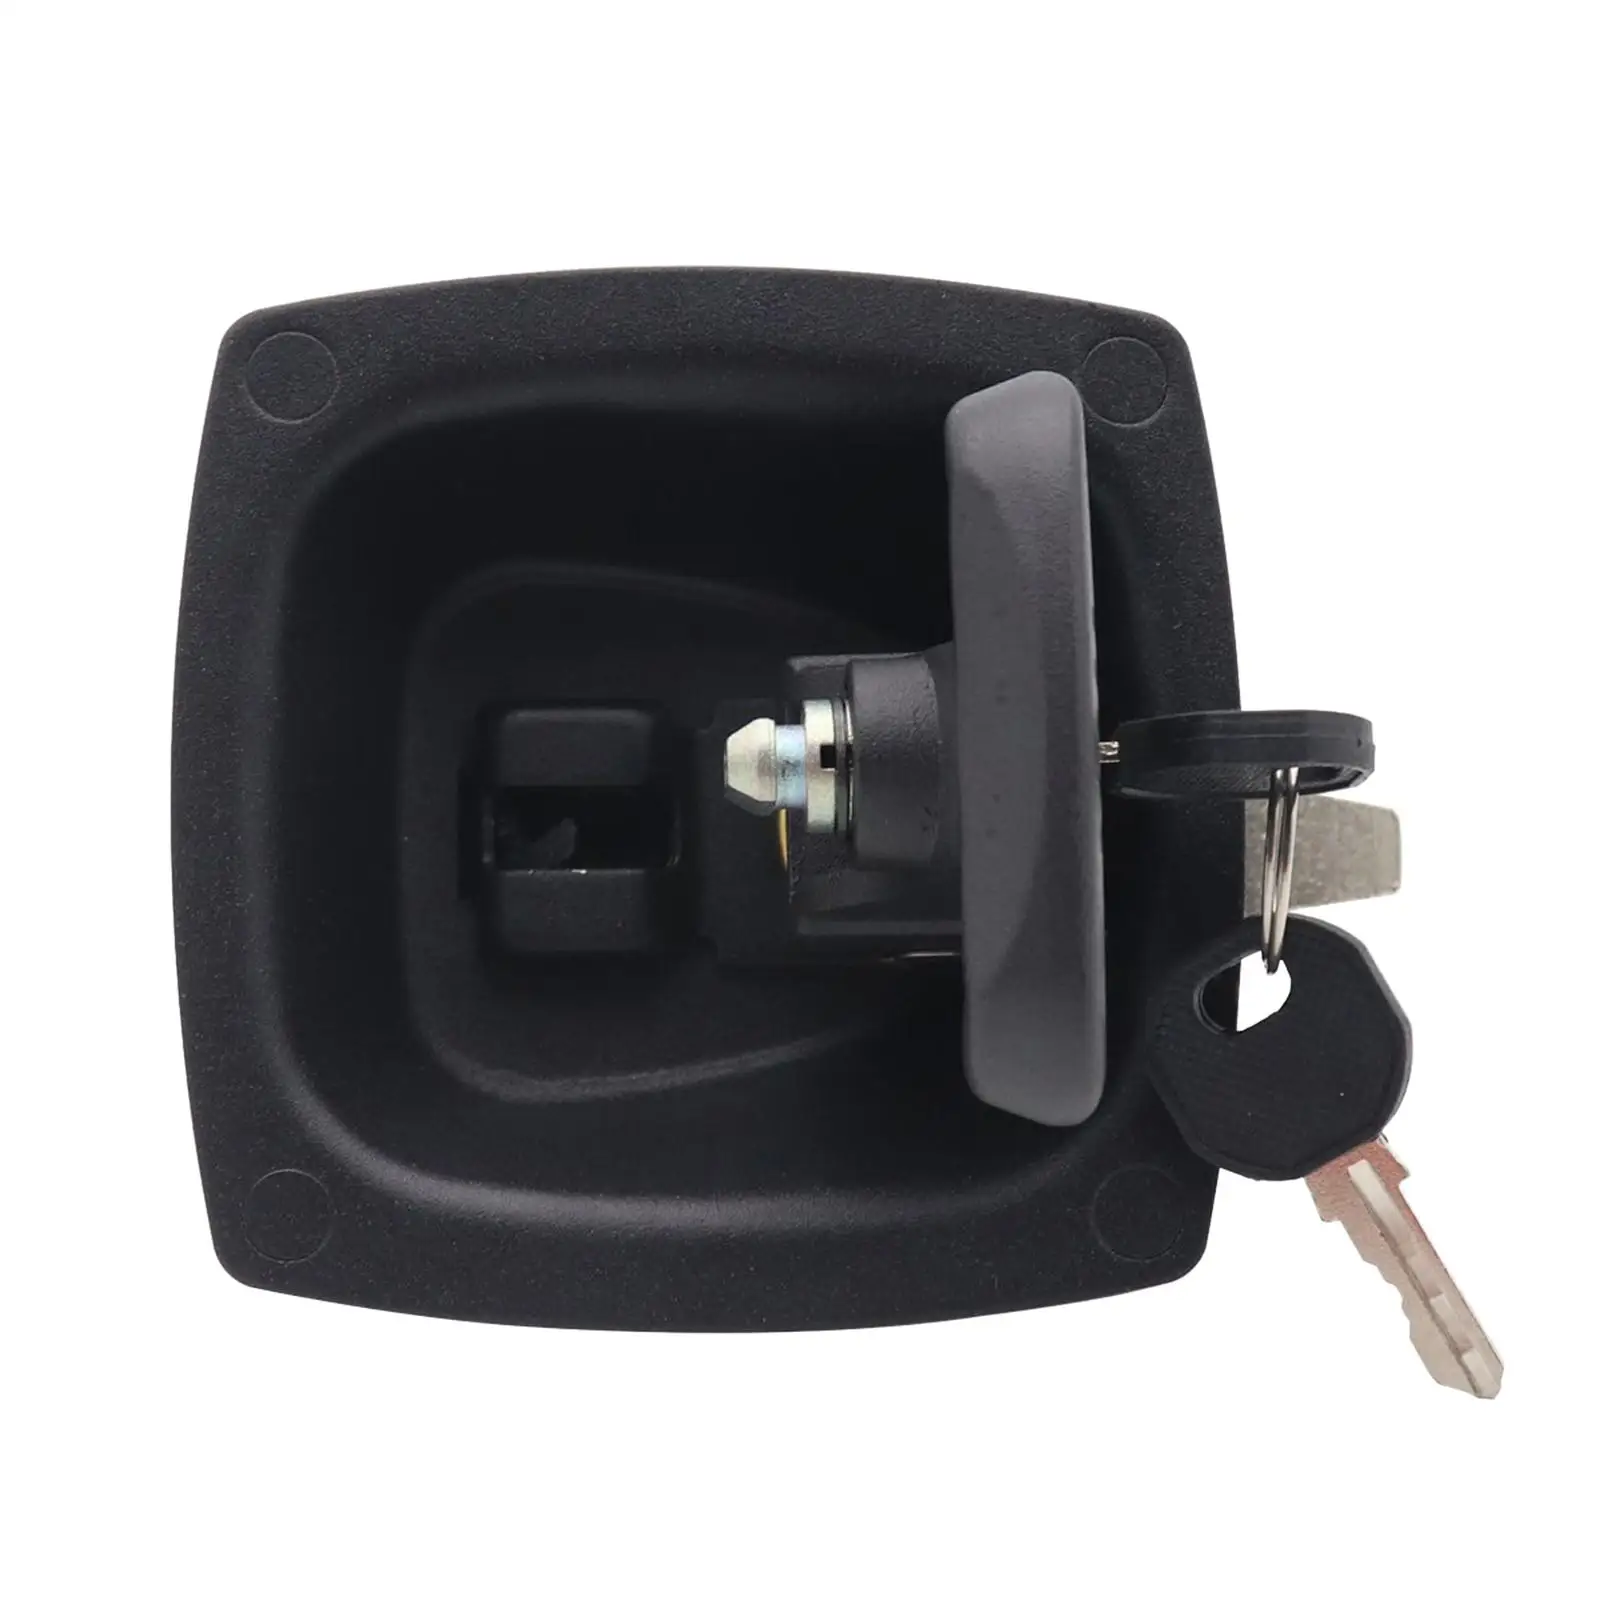 Folding Compression Tool Box Lock Zinc Alloy Secure Locking 11cmx11cm Ergonomic Door Lock Replacements for RV Boat Sturdy